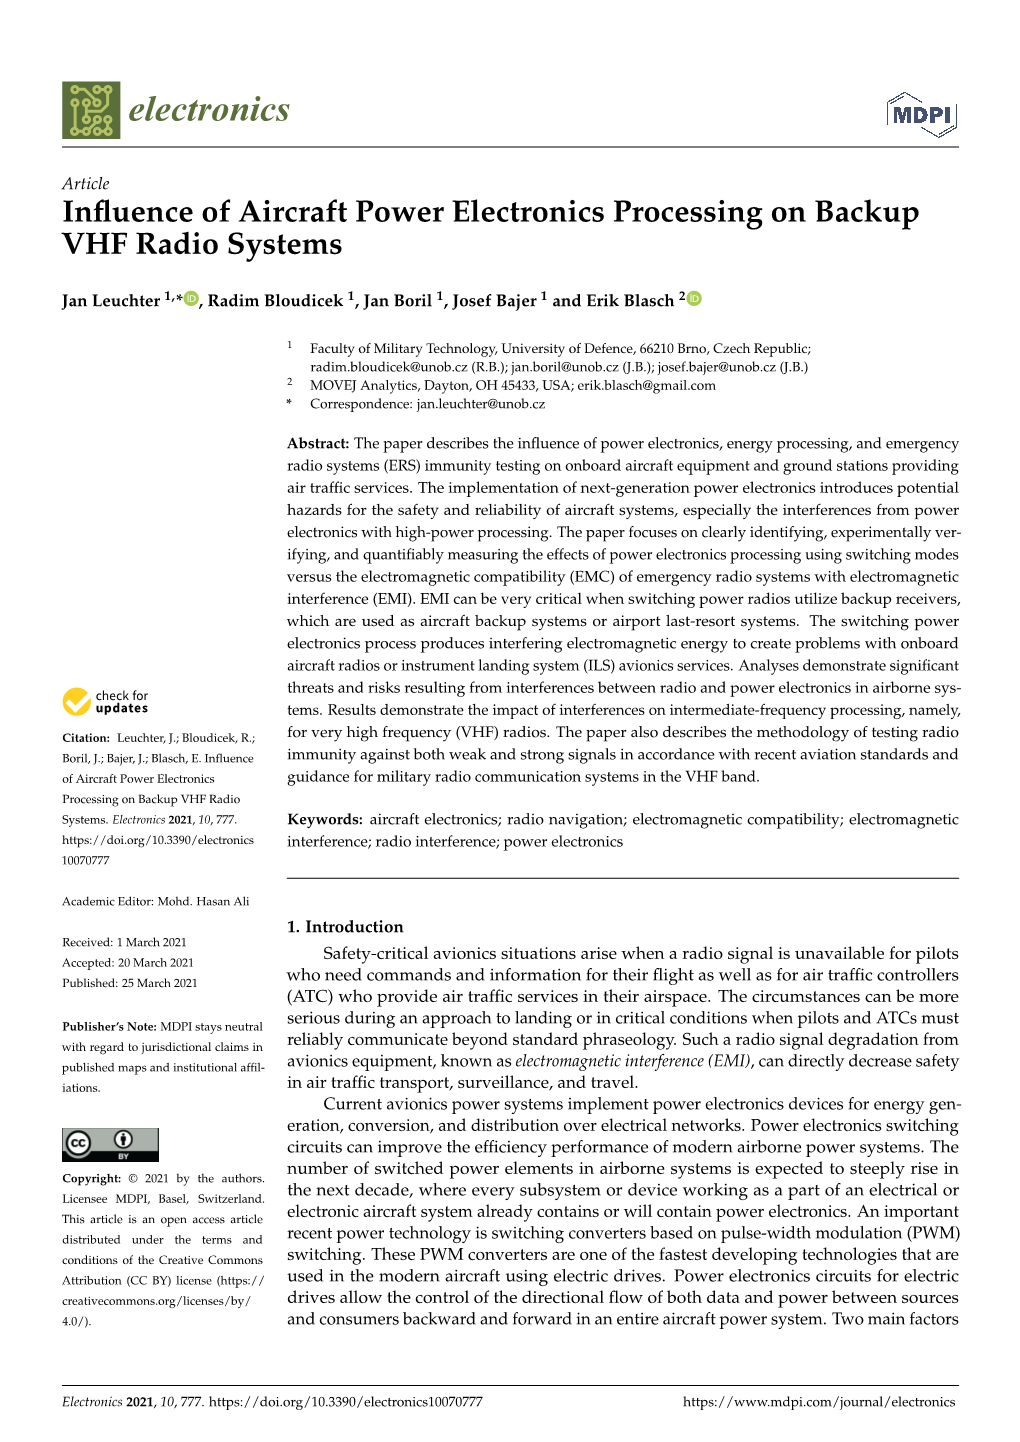 Influence of Aircraft Power Electronics Processing on Backup VHF Radio